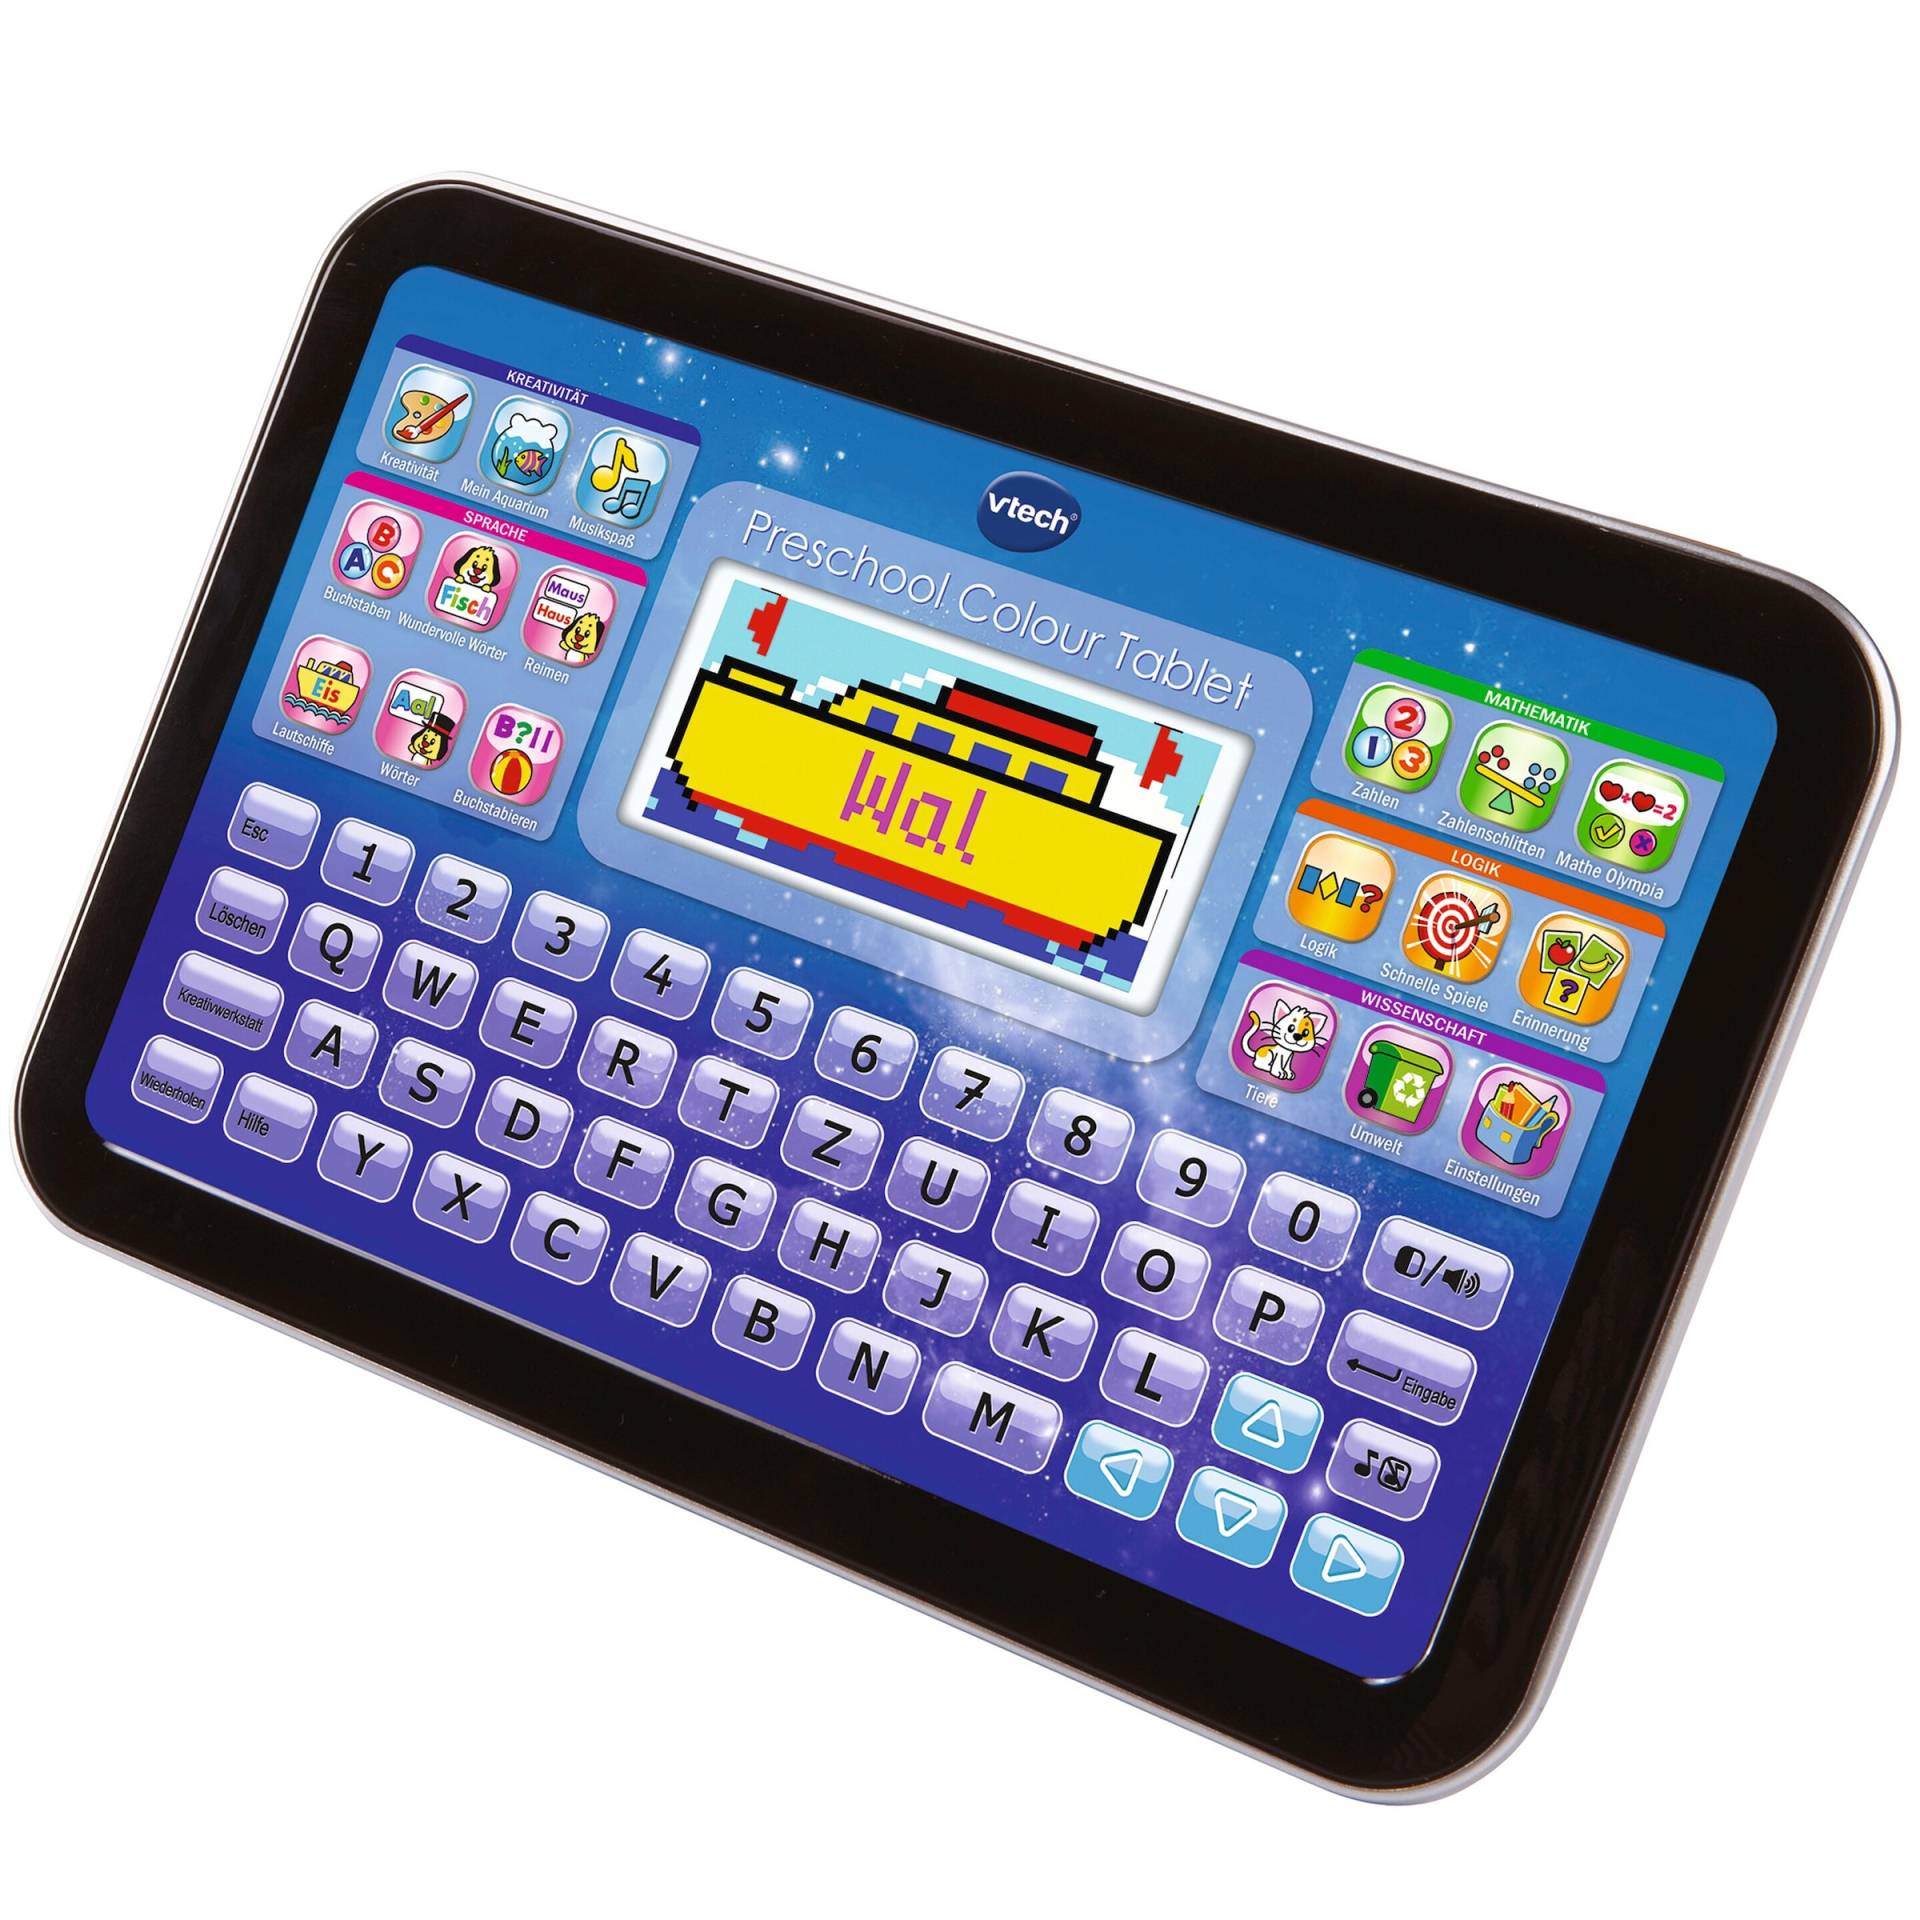 Vtech Ready Set School Tablet Preschool Colour von Vtech